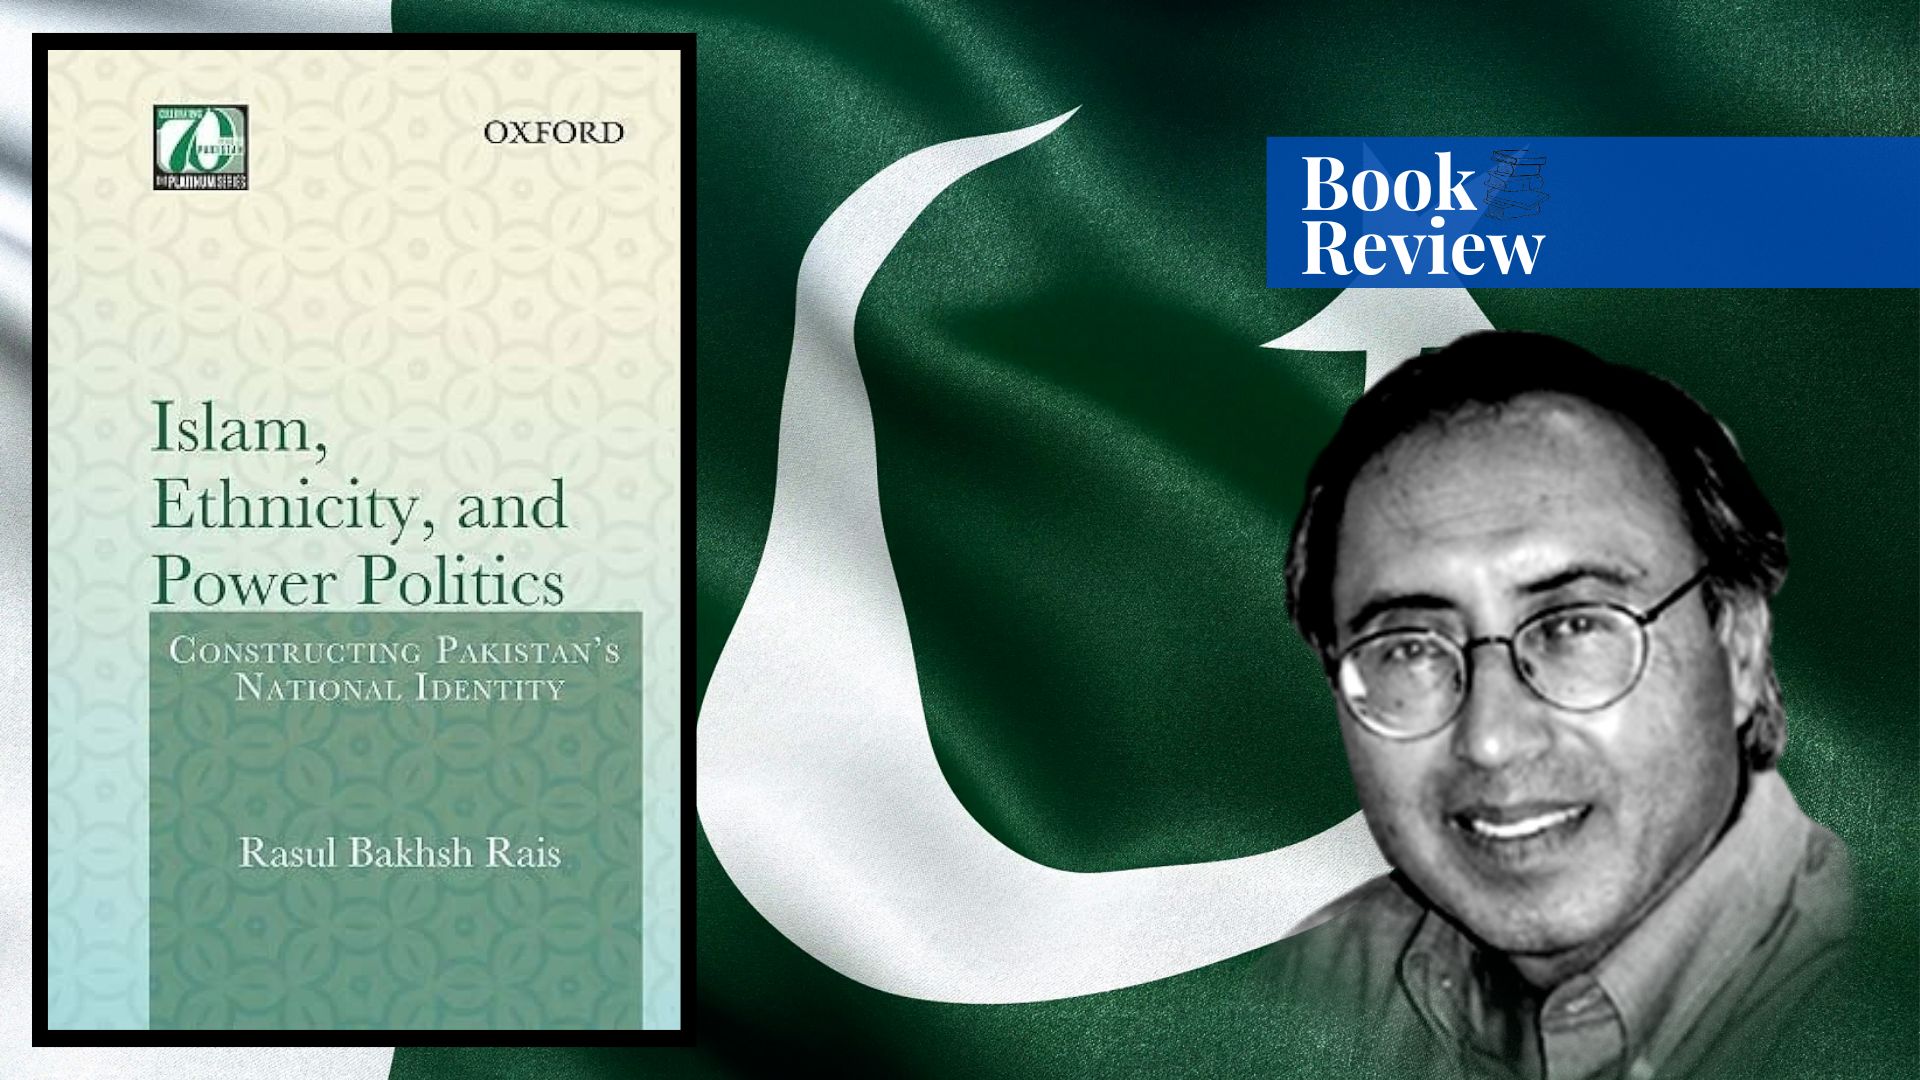 Islam, Ethnicity, and Power Politics by Rasul Bakhsh Rais - Paradigm Shift